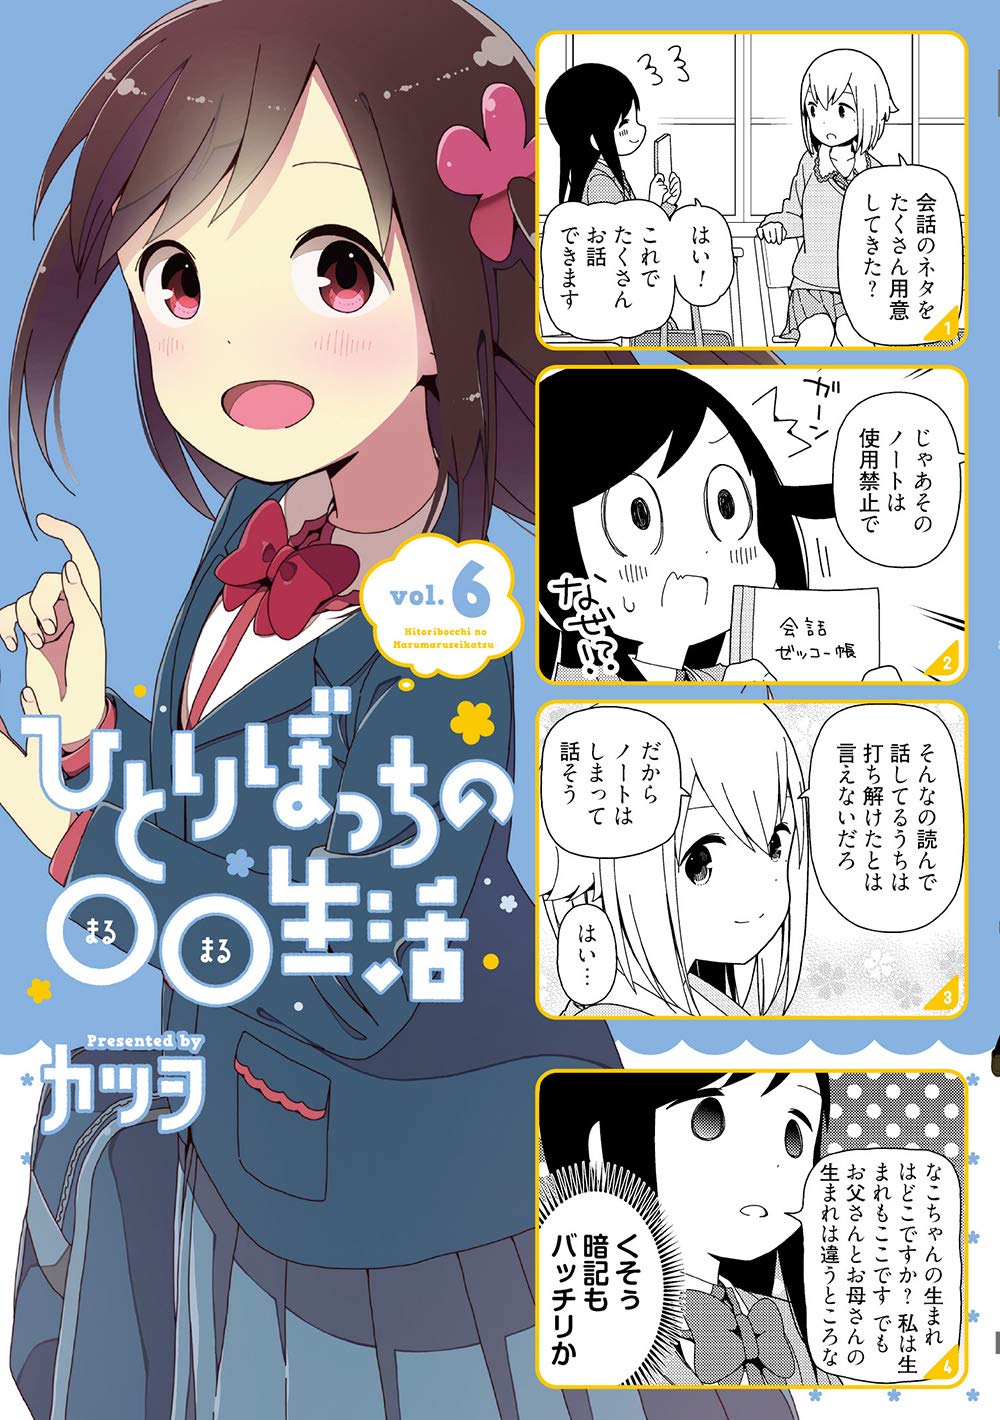 No la olvides: manga de Hitori Bocchi no Marumaru Seikatsu llega a su final  en abril